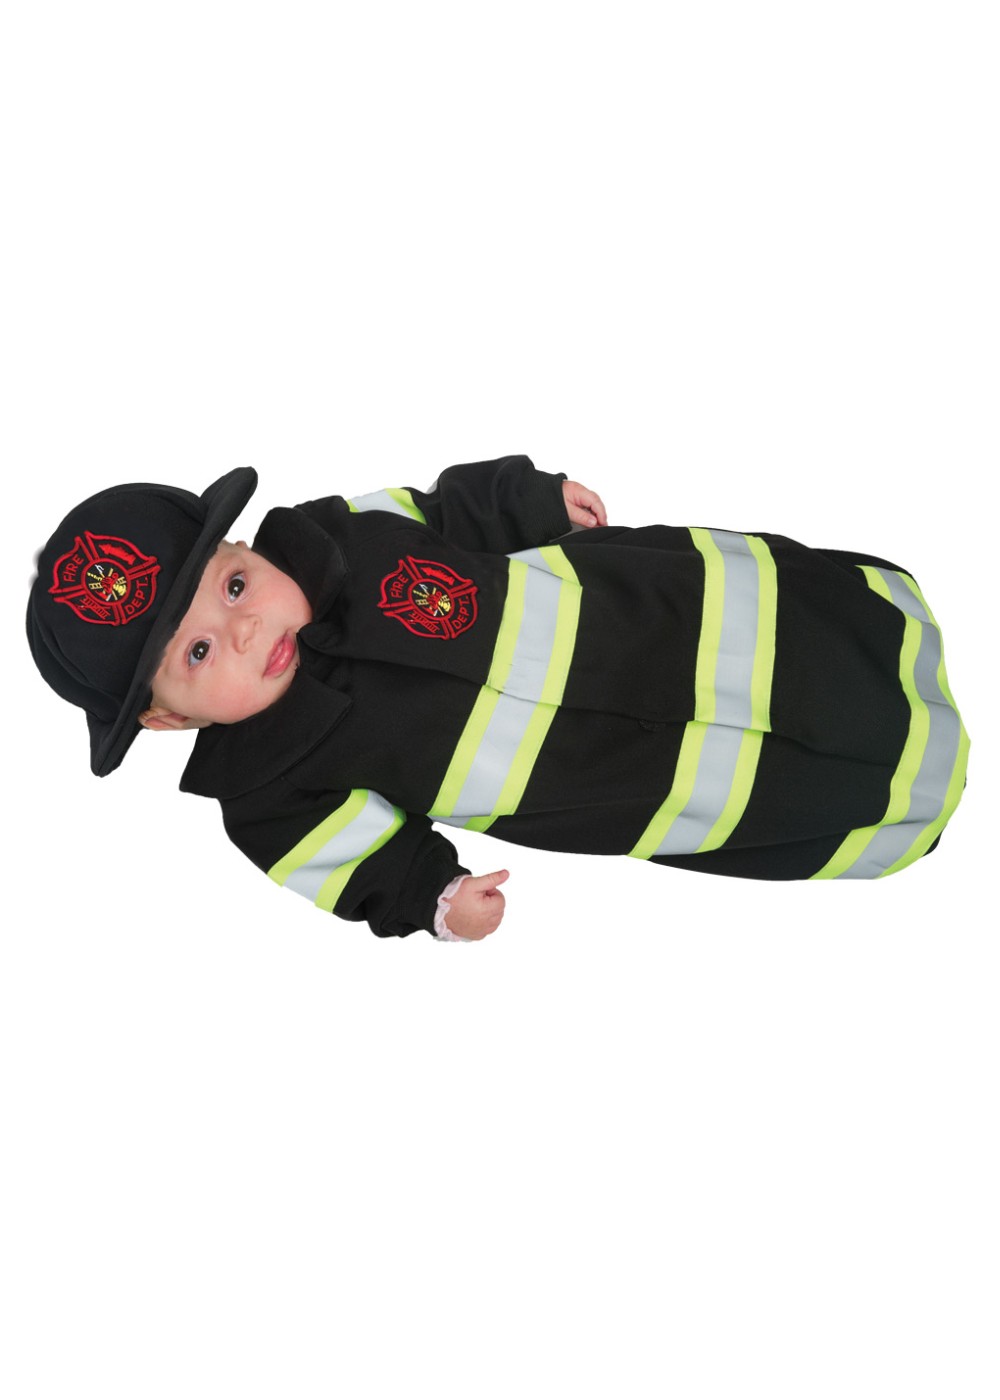 Toddler Fireman Bunting Costume